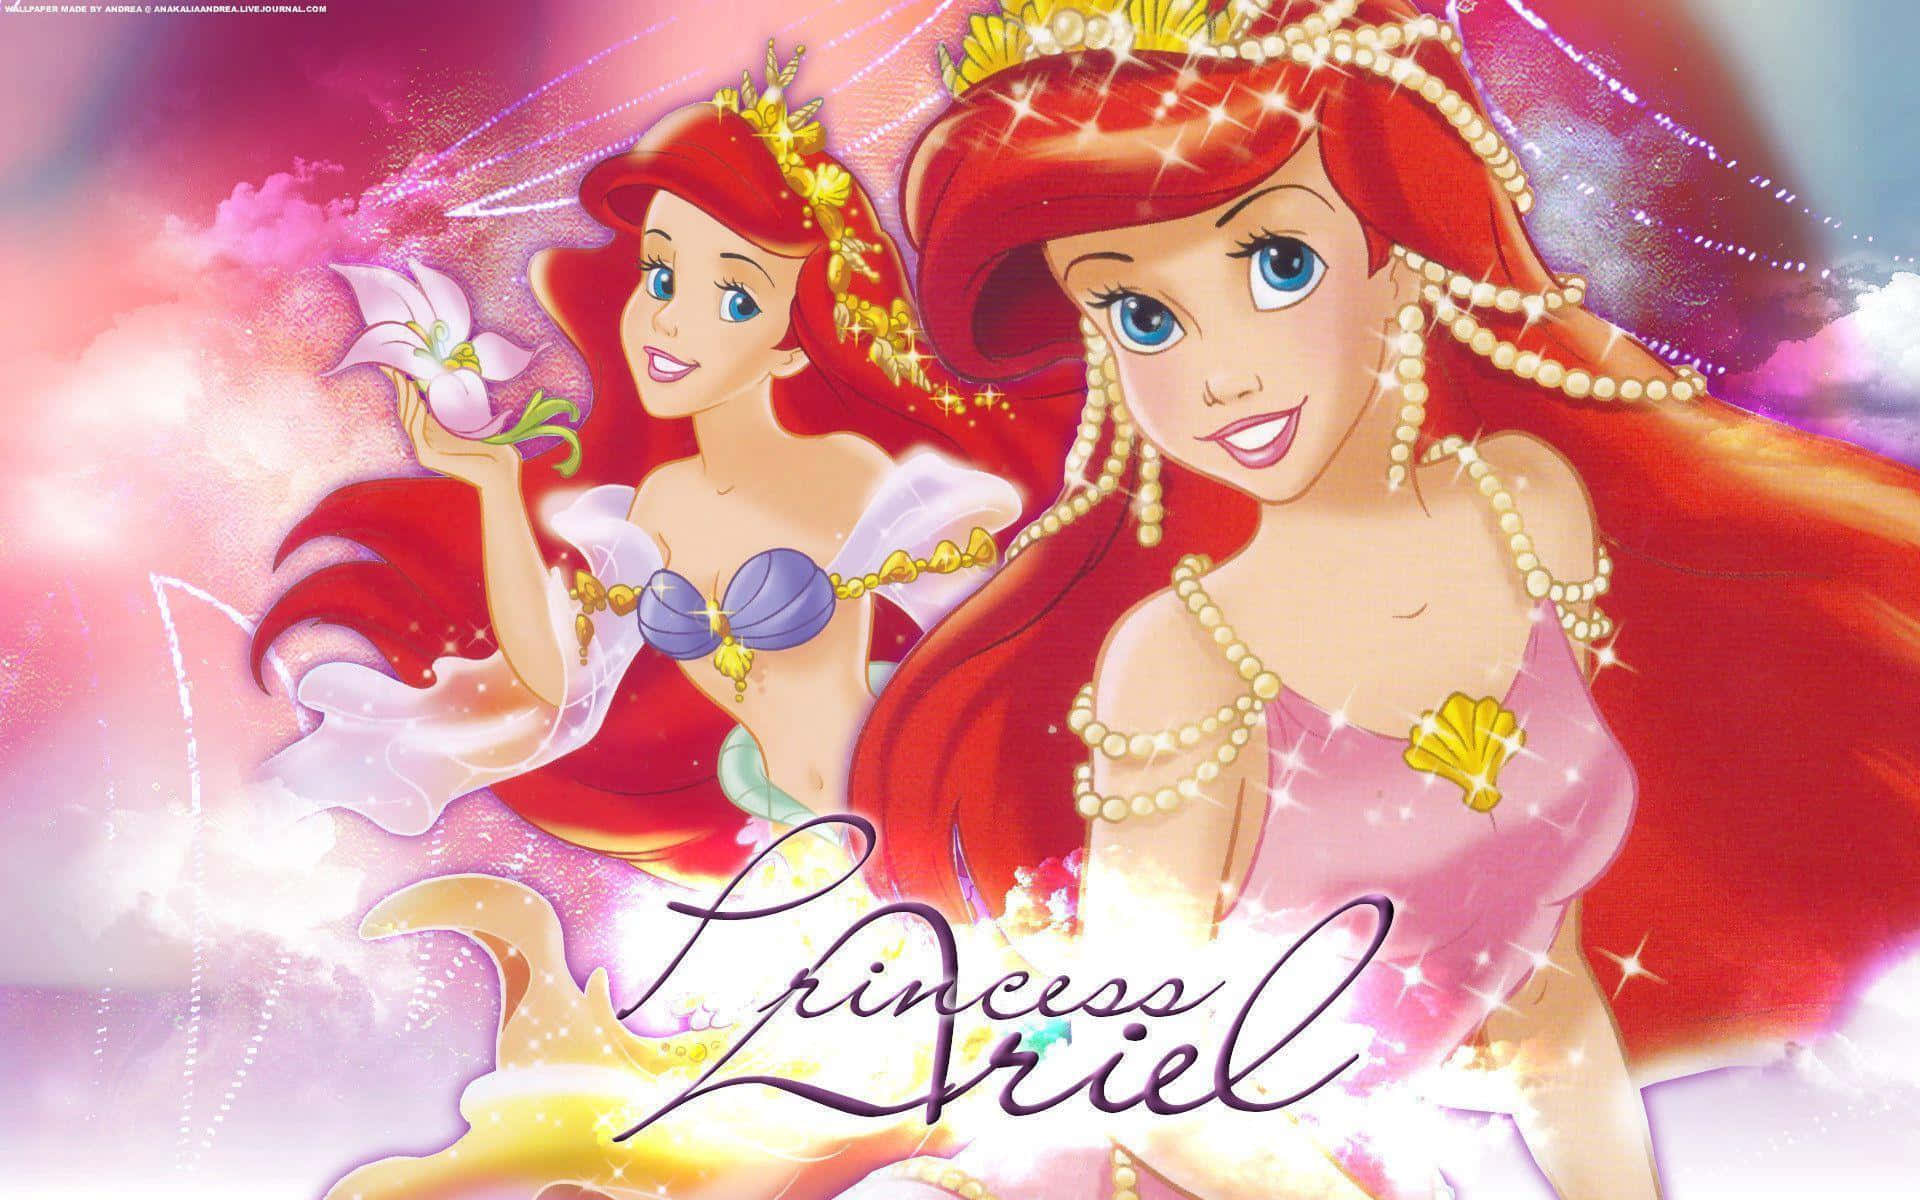 Feel the Joyful Freedom with Ariel